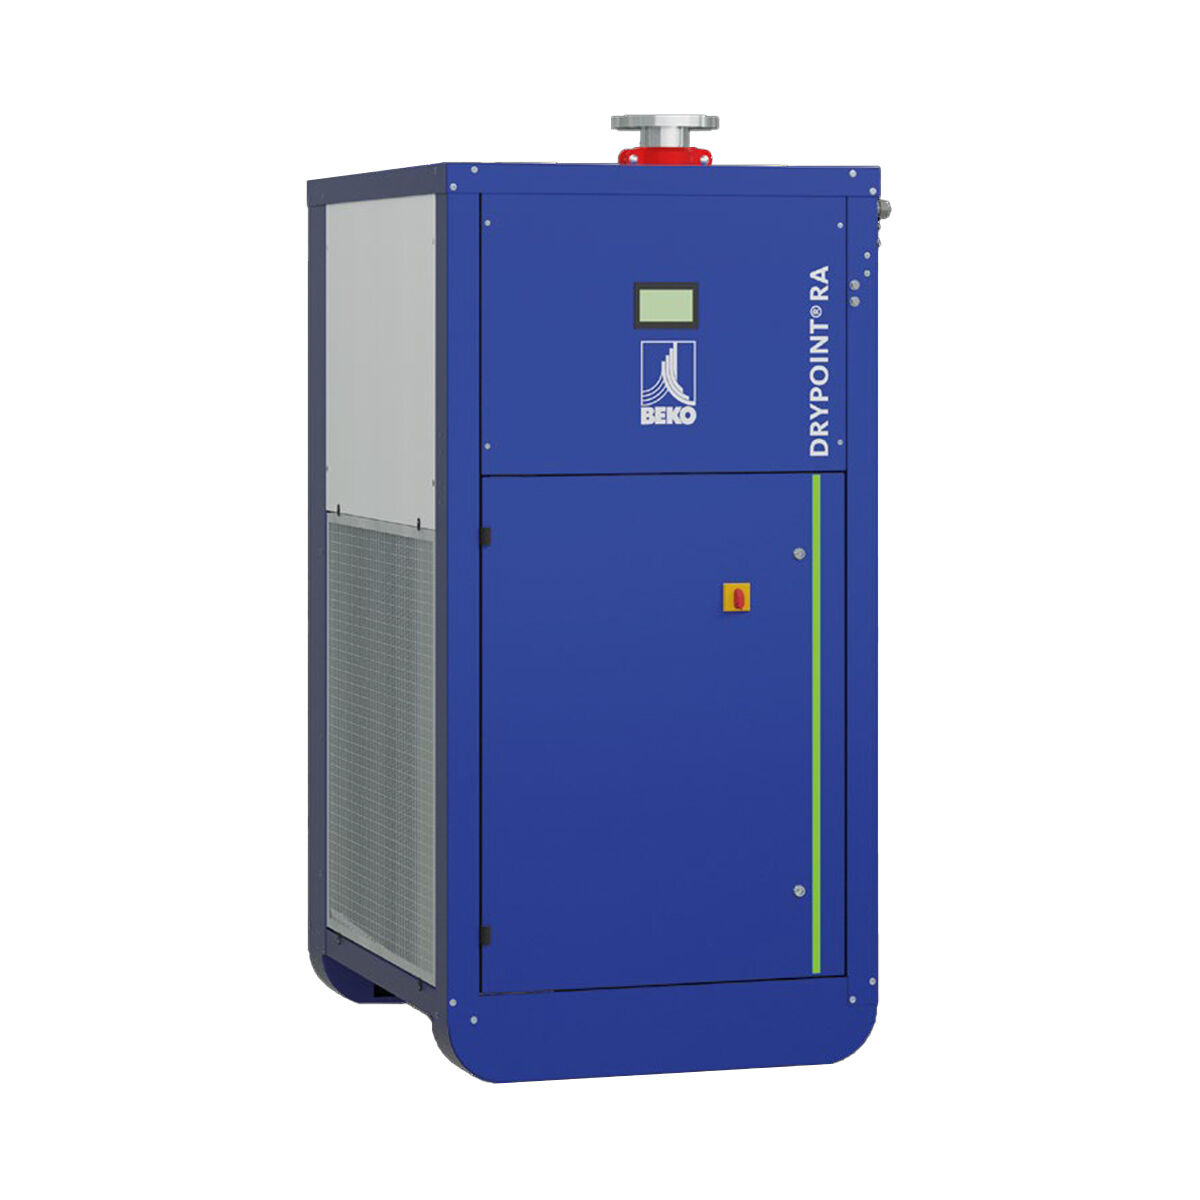 BEKO DRYPOINT RA III 70/AC essiccatore a refrigerazione ad aria compressa con Bekomat, raffreddato ad aria